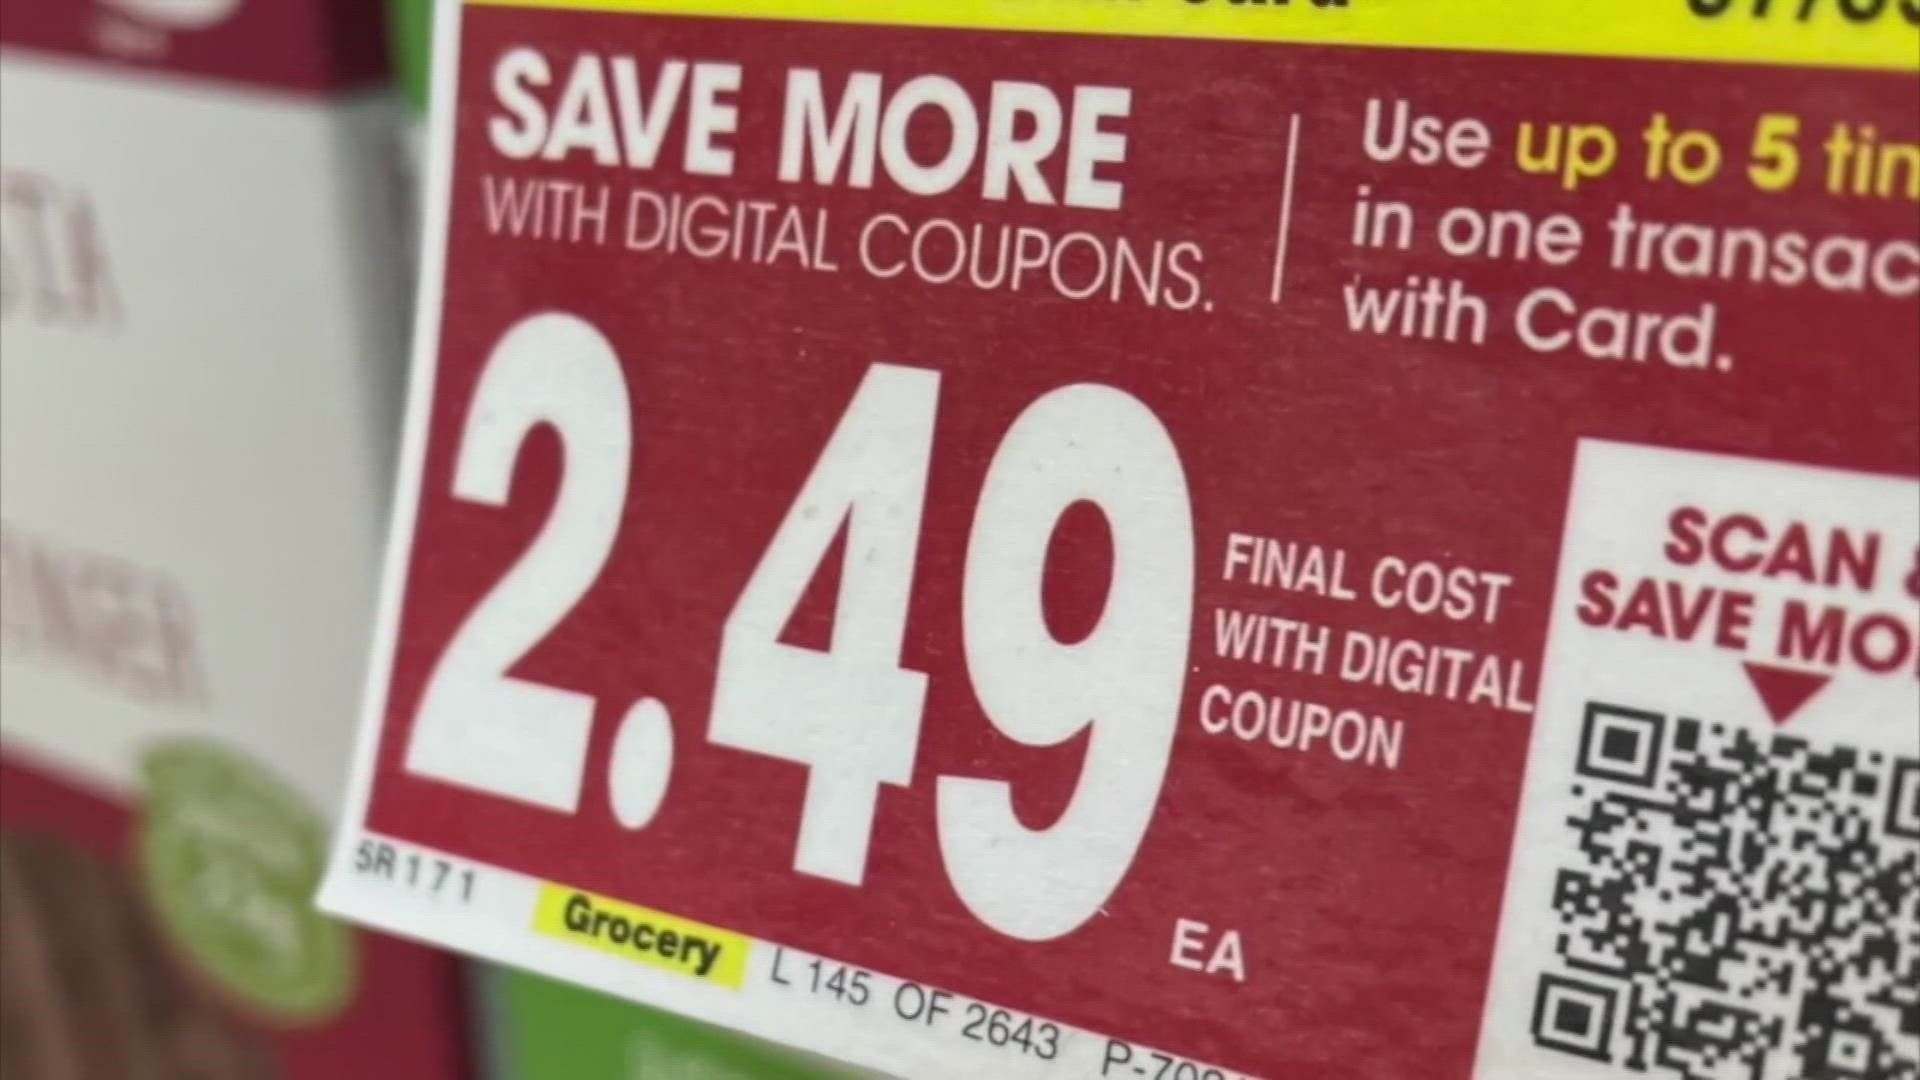 Seniors tech challenged struggle to use digital coupons khou com